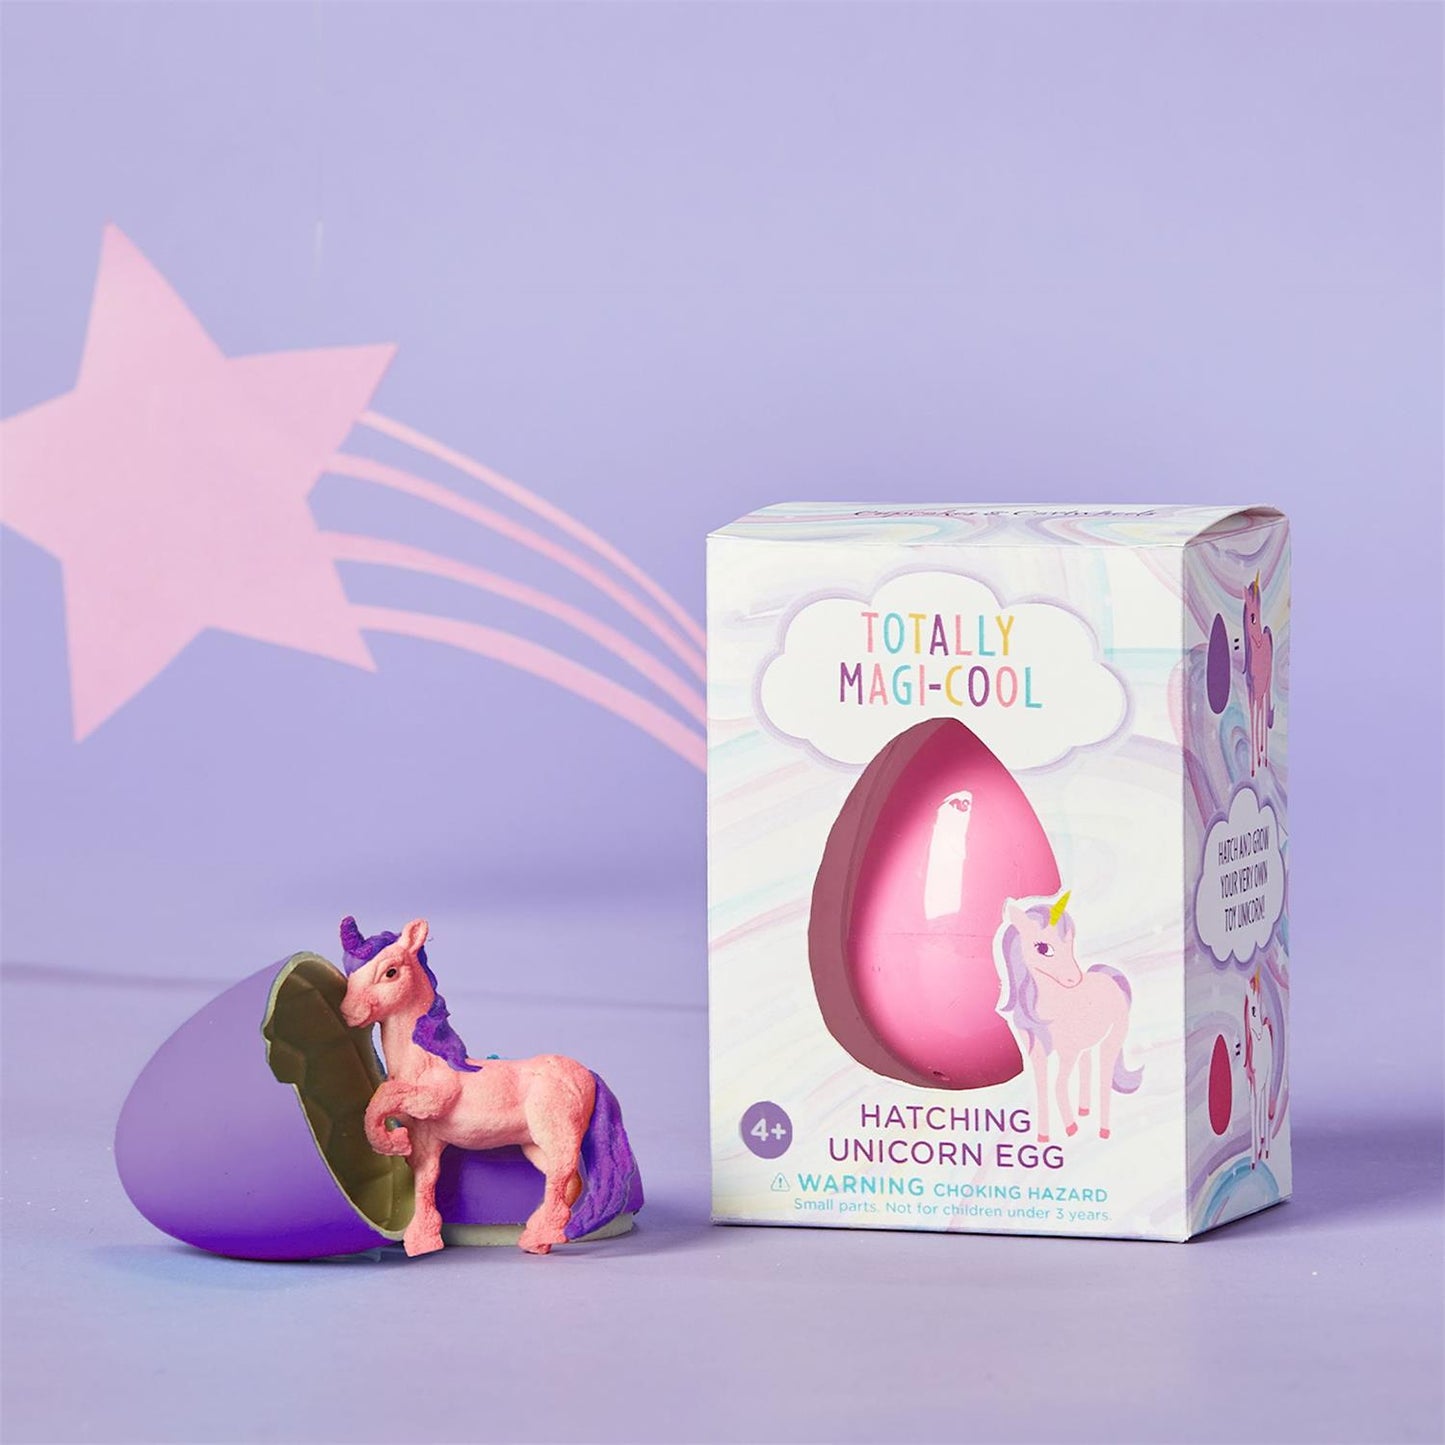 Totally Magi-Cool Hatching Unicorn Egg in Gift Box